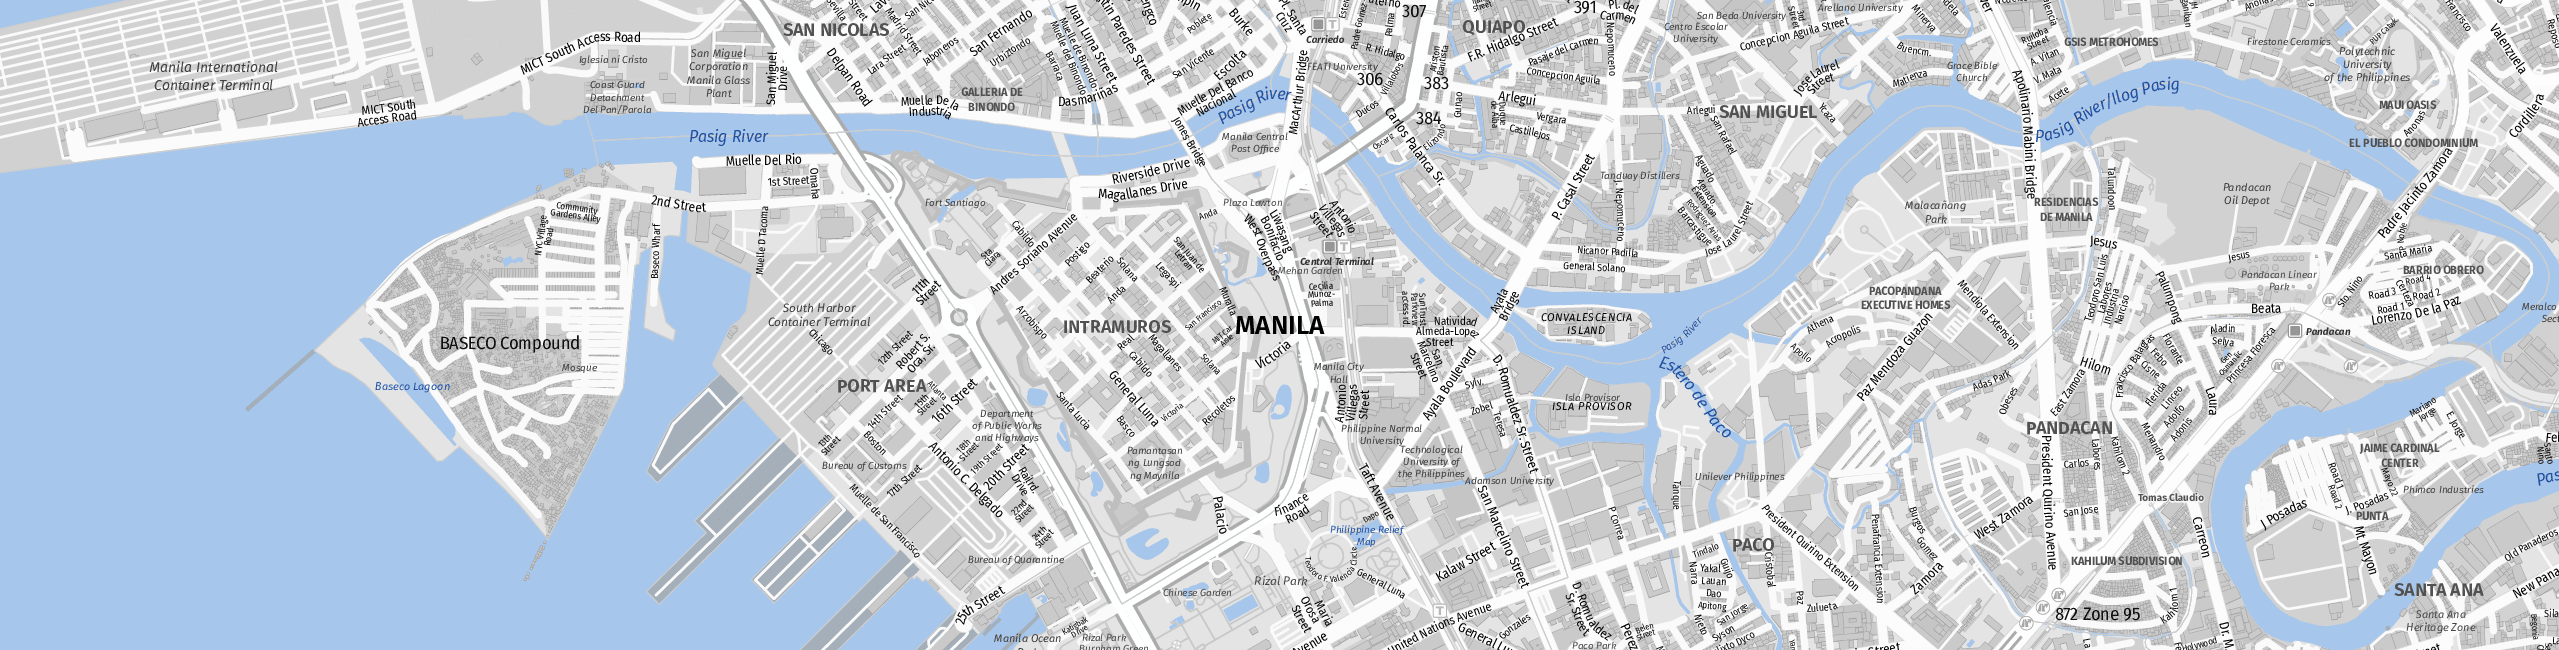 Stadtplan Manila zum Downloaden.